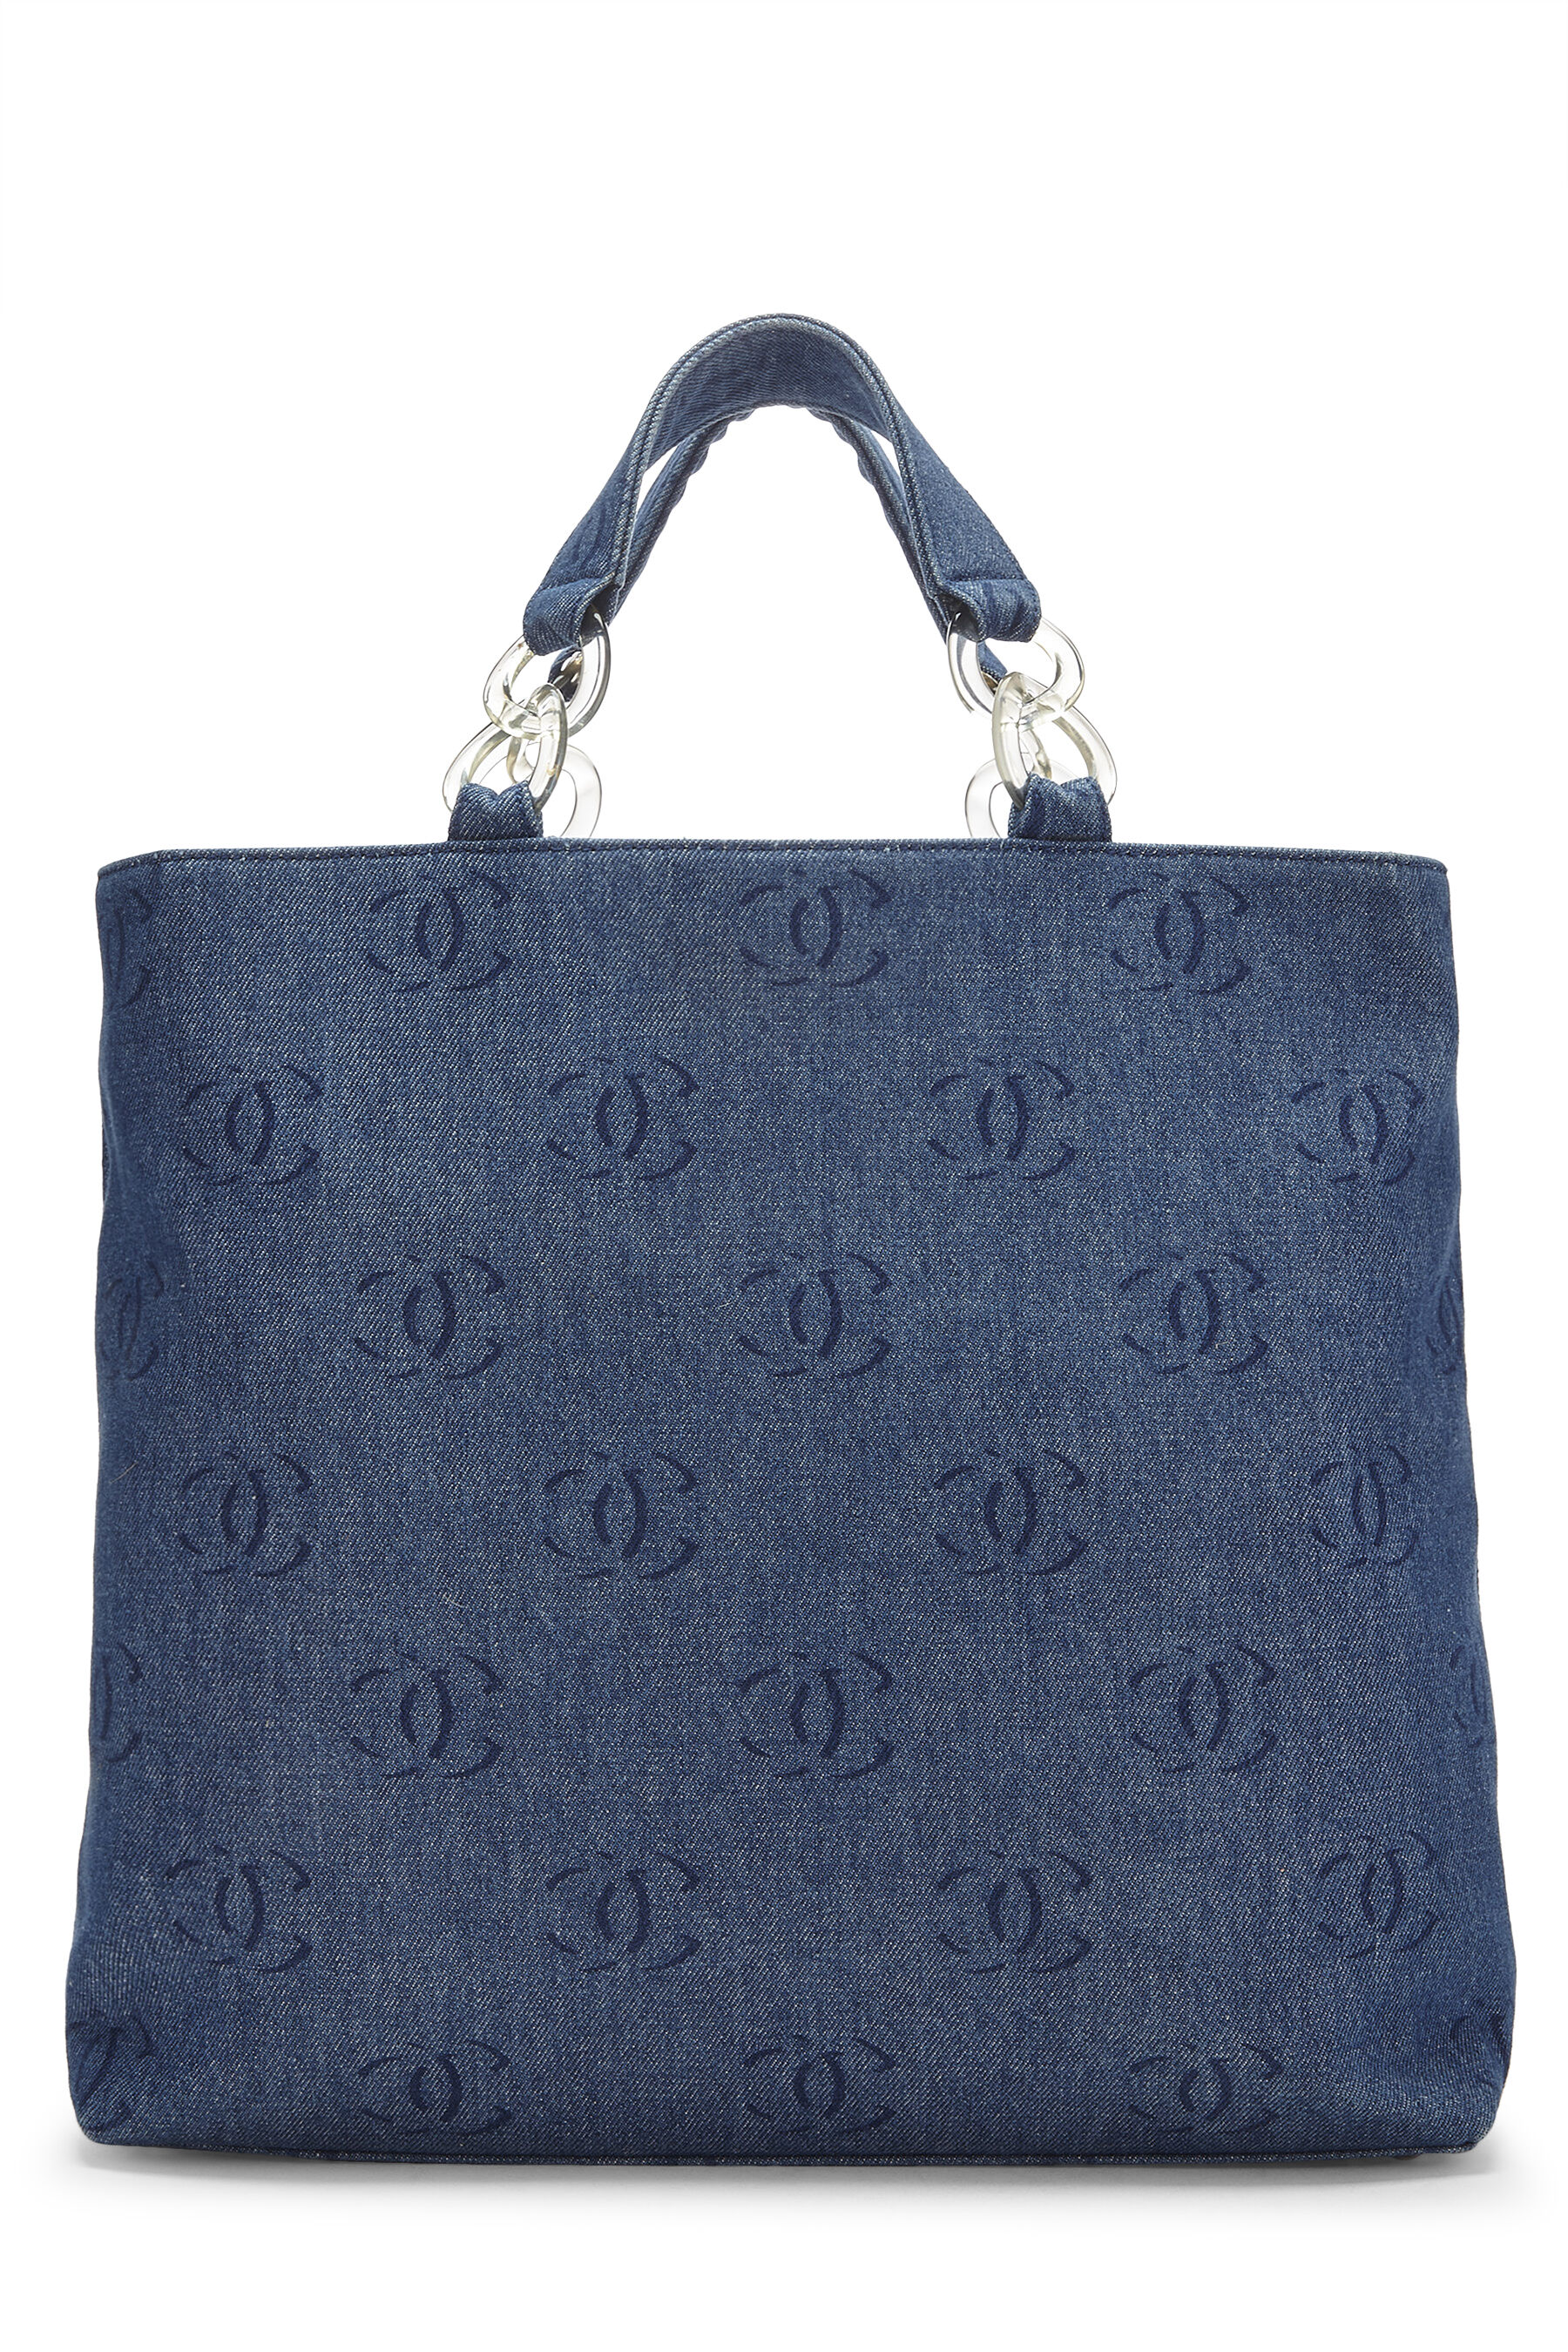 Chanel - Blue Denim CC Shopping Bag Large